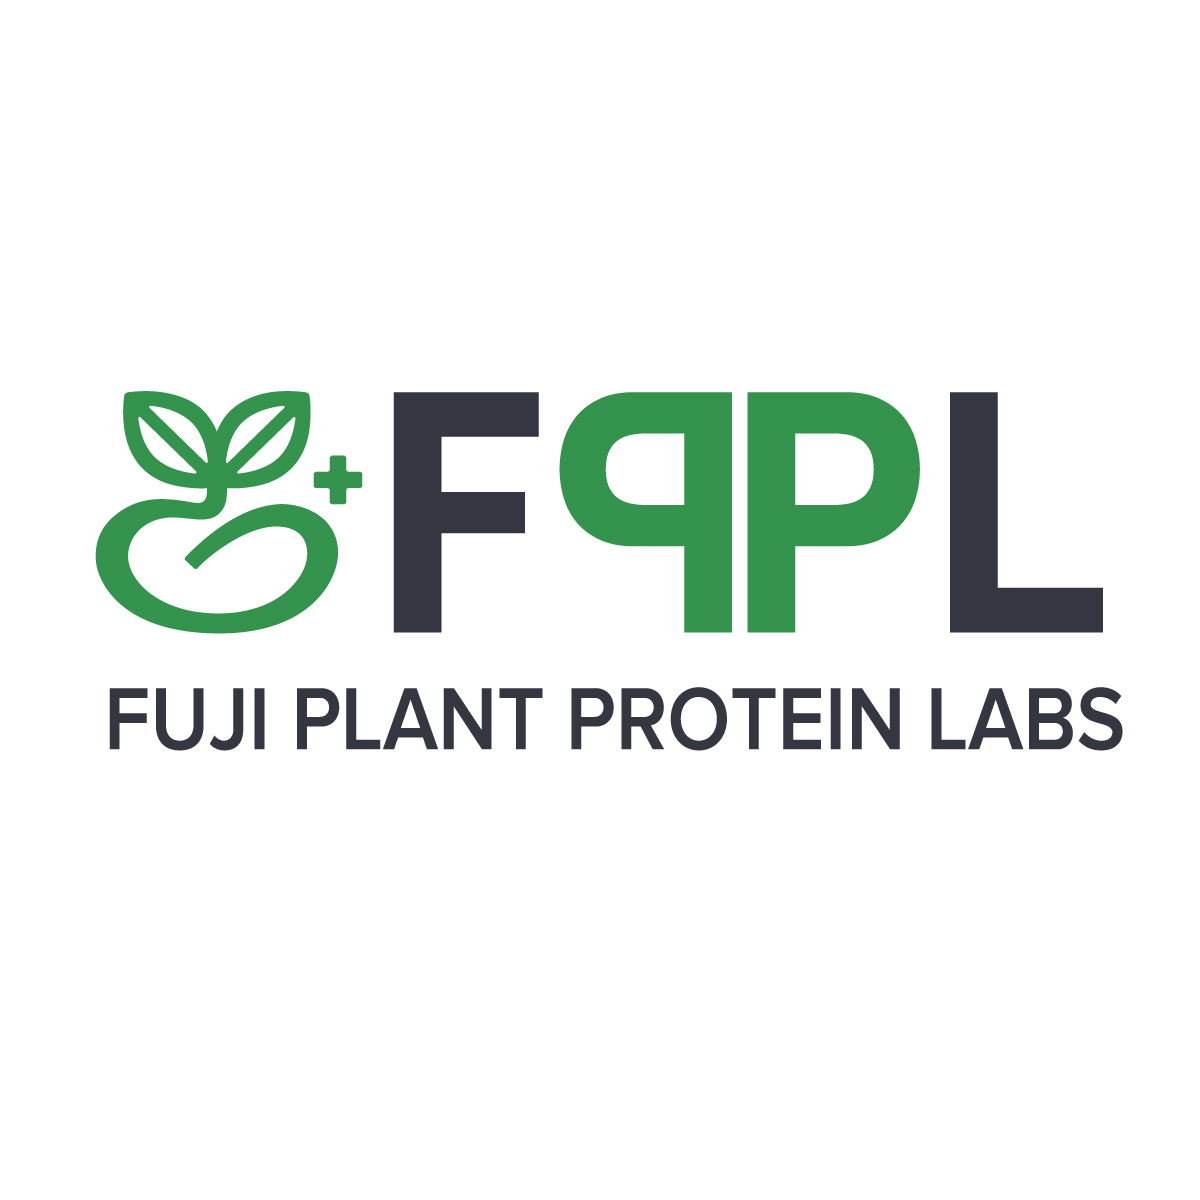 Fuji Plant Protein Labs